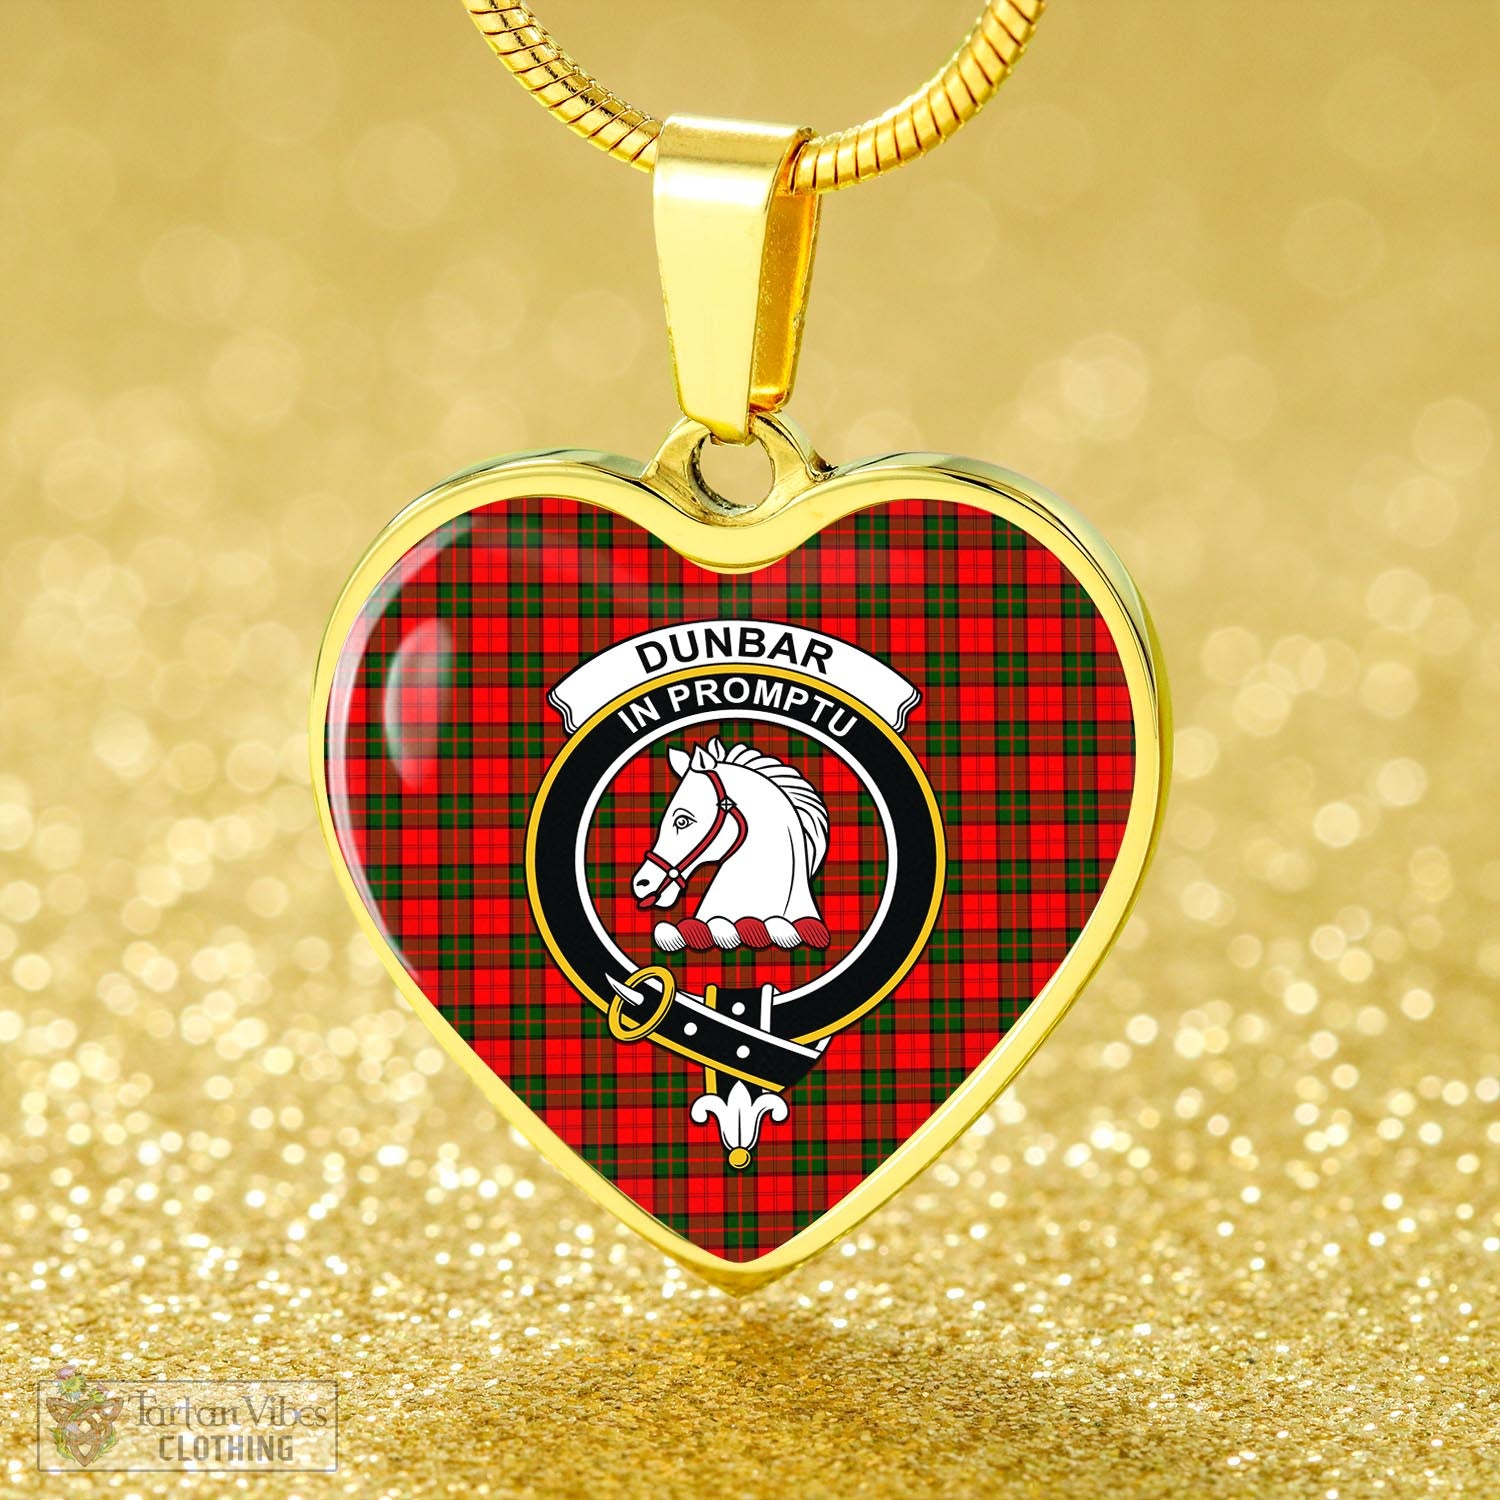 Tartan Vibes Clothing Dunbar Modern Tartan Heart Necklace with Family Crest